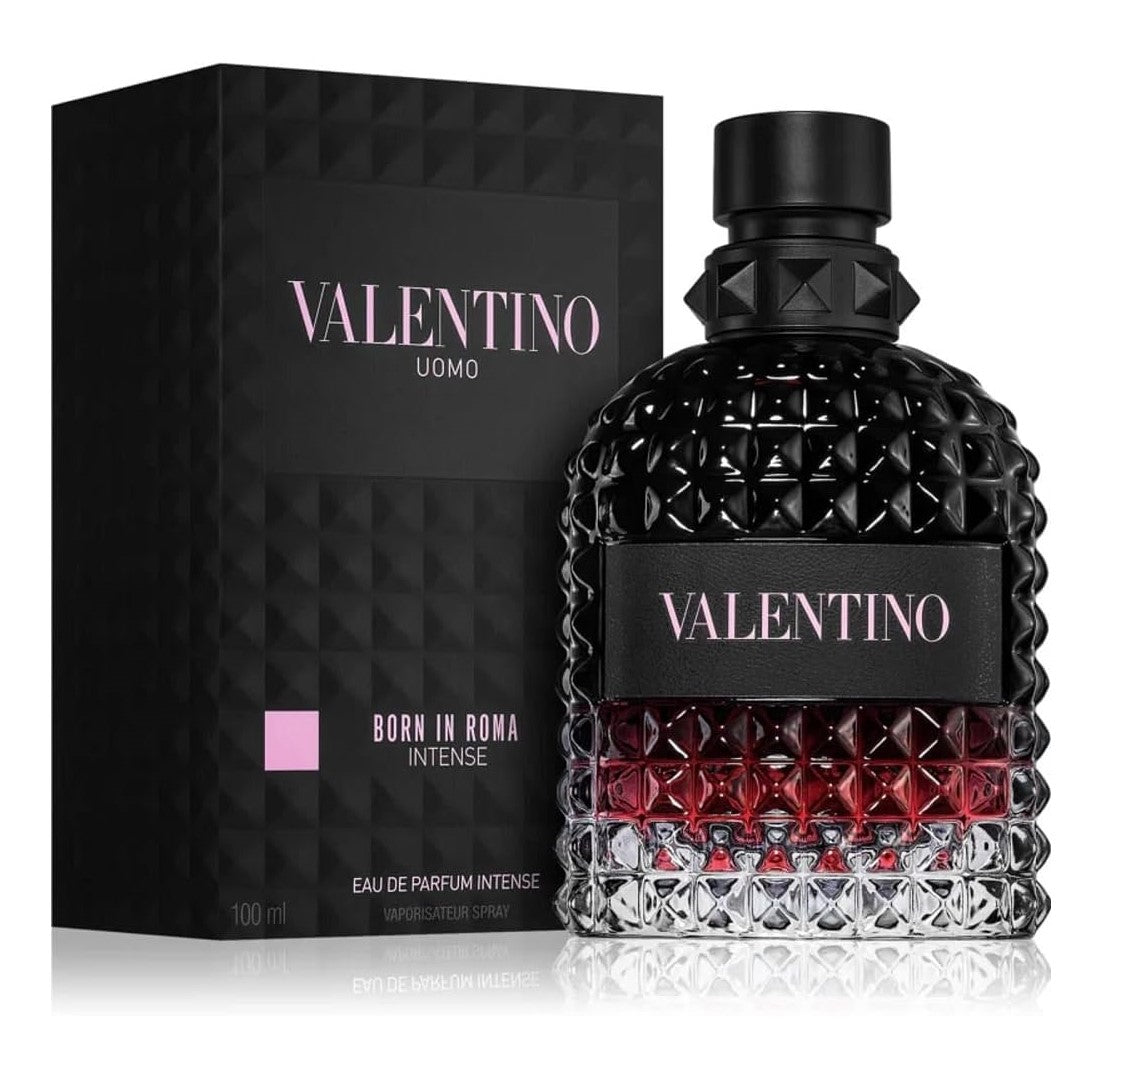 Valentino Uomo Born In Roma Intense for Men - Eau De Parfum Intense -100ml